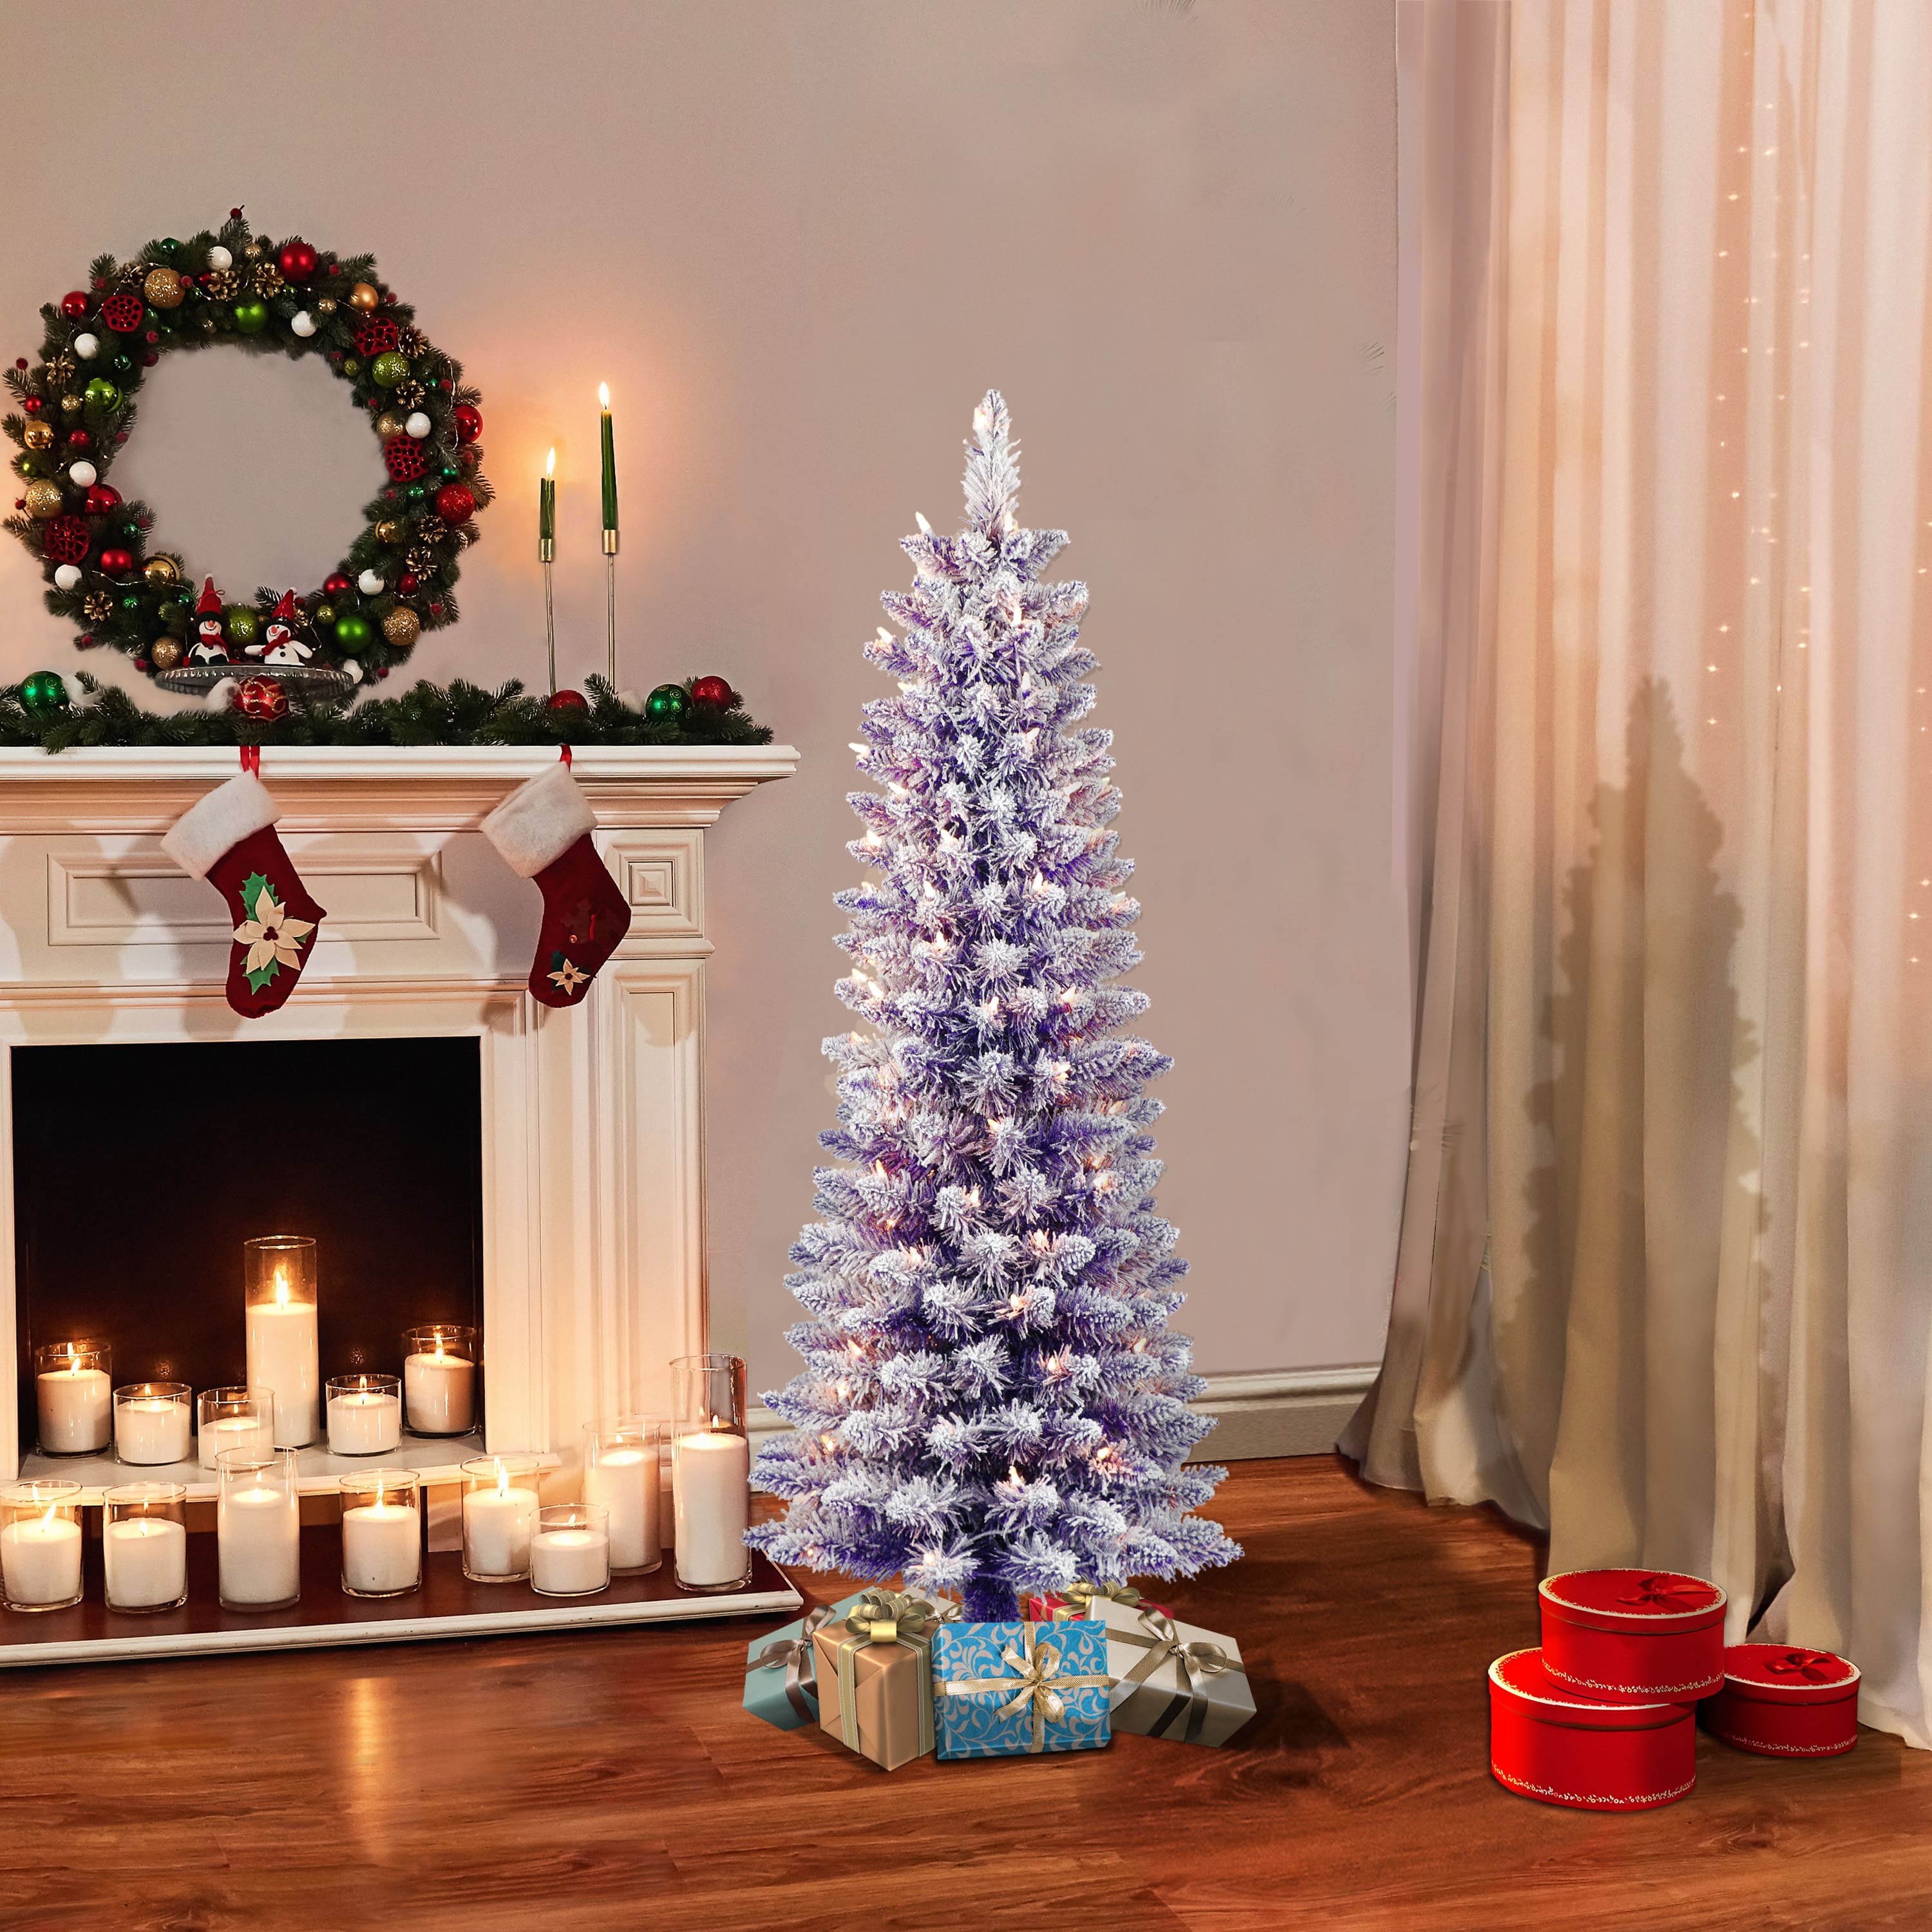 4.5ft. Pre-Lit Flocked Fashion Purple Pencil Artificial Christmas Tree, Clear Lights